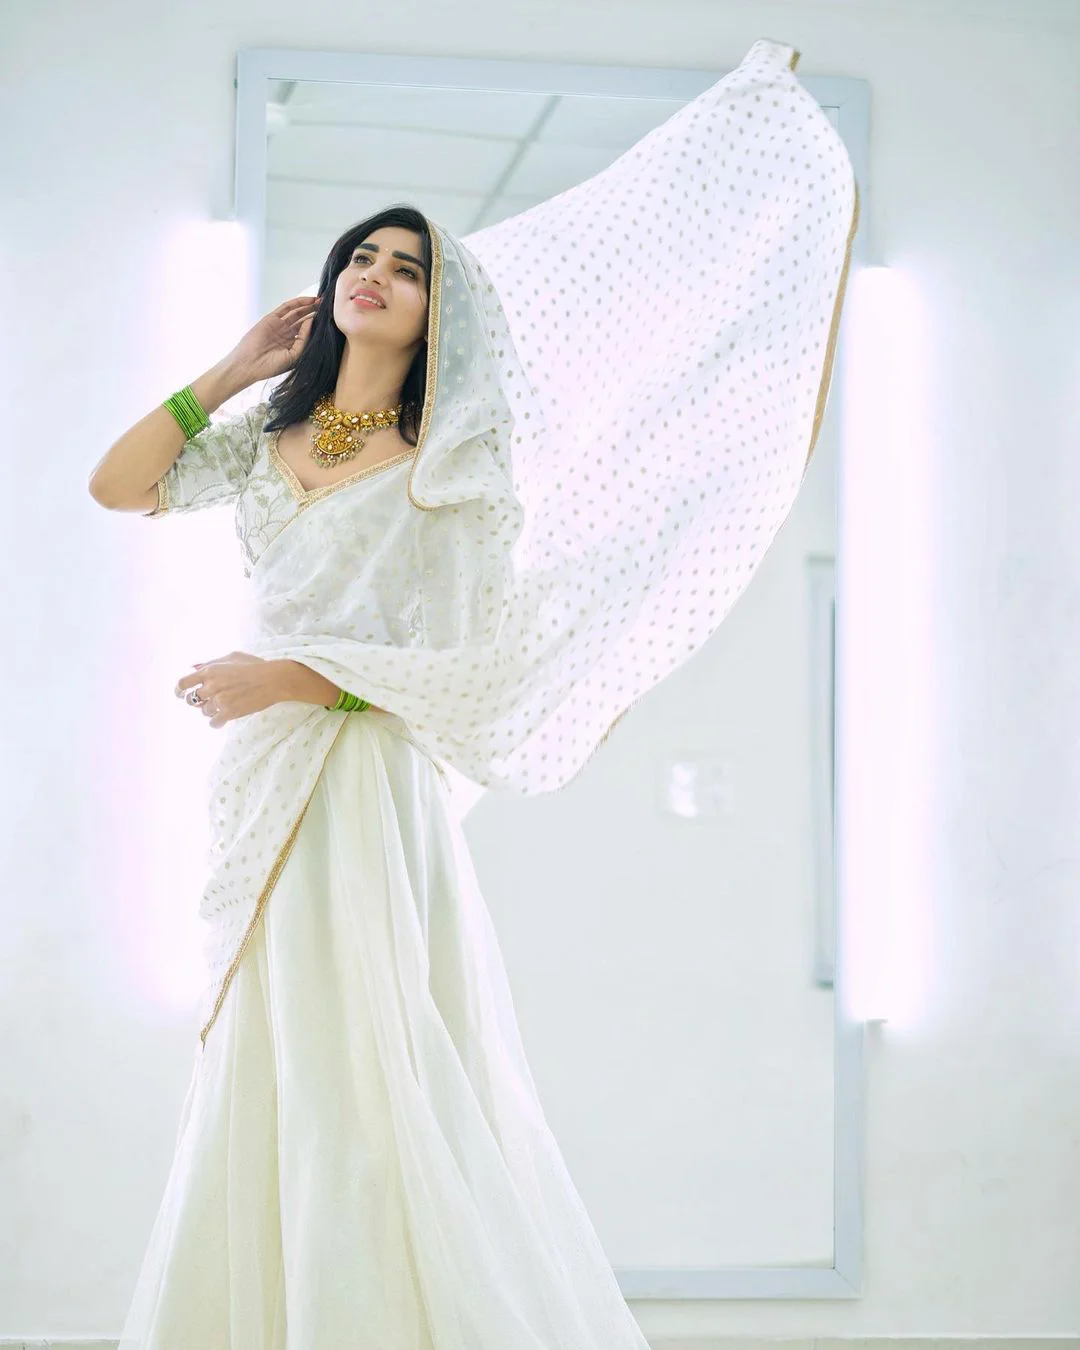 Jabardasth Varsha fabulous looks in white saree..